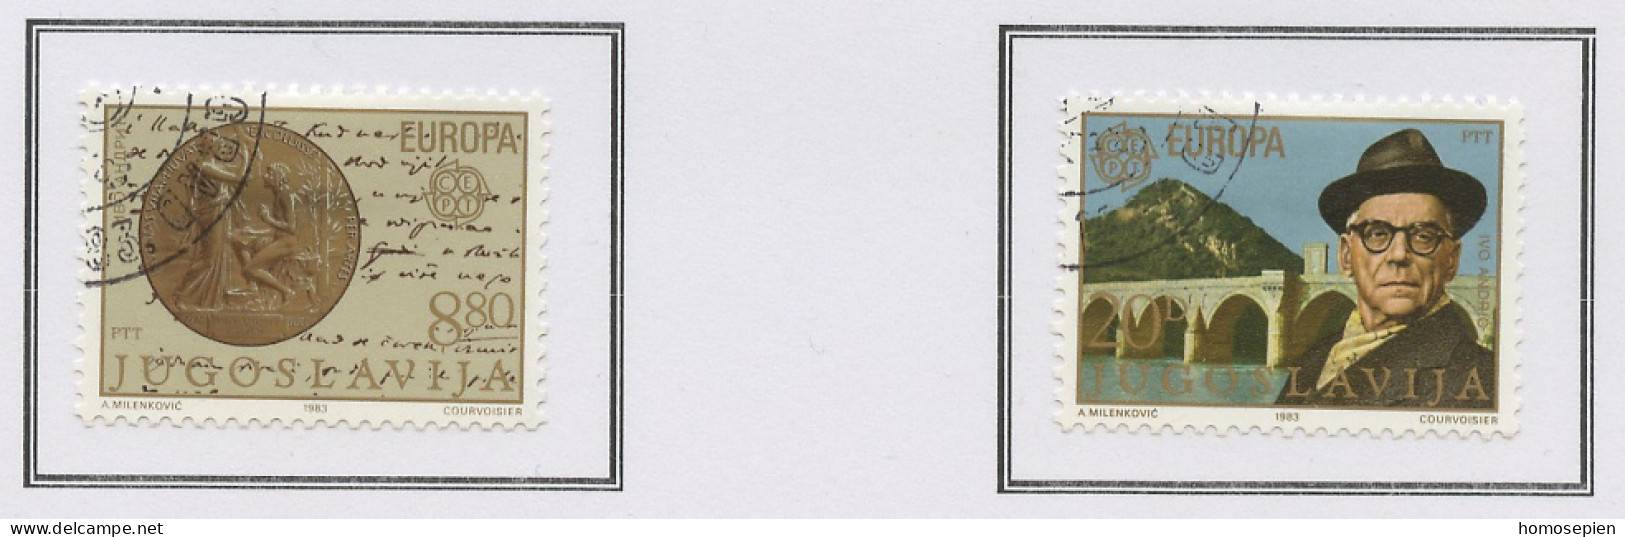 Yougoslavie - Jugoslawien - Yugoslavia 1983 Y&T N°1866 à 1867 - Michel N°1984 à 1985 (o) - EUROPA - Used Stamps